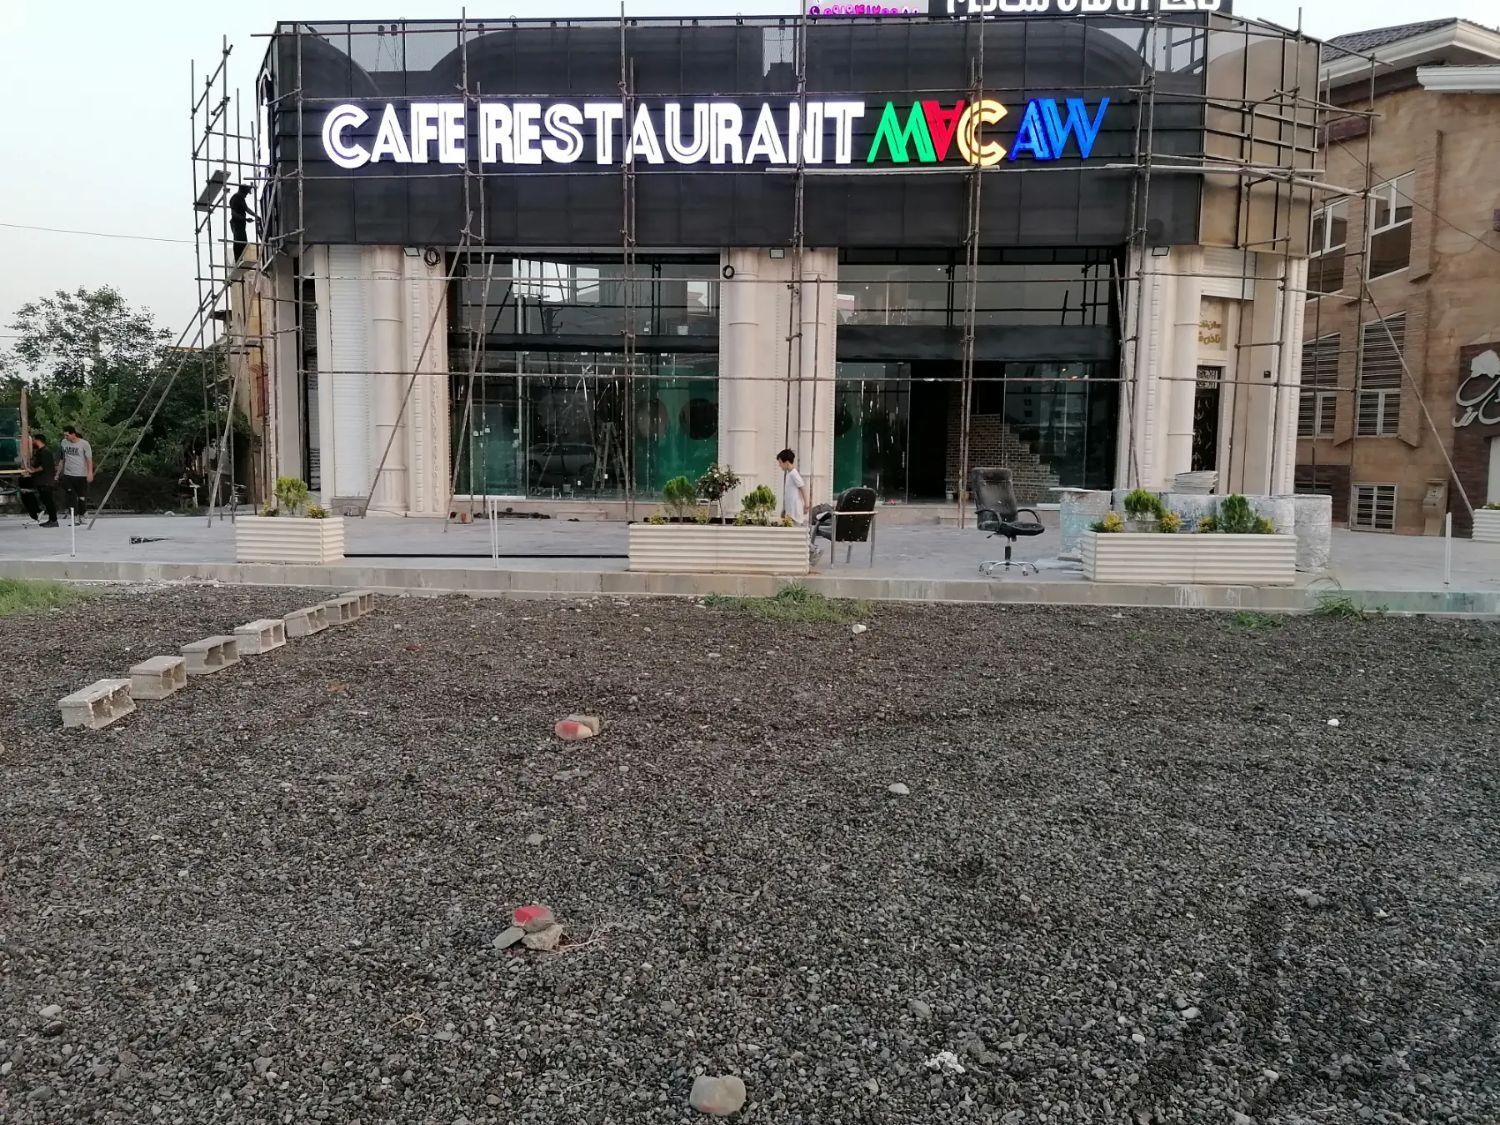 فروش تابلو حروف تمام پلکسی کافه رستوران|کافی‌شاپ و رستوران|تهران, زعفرانیه|دیوار